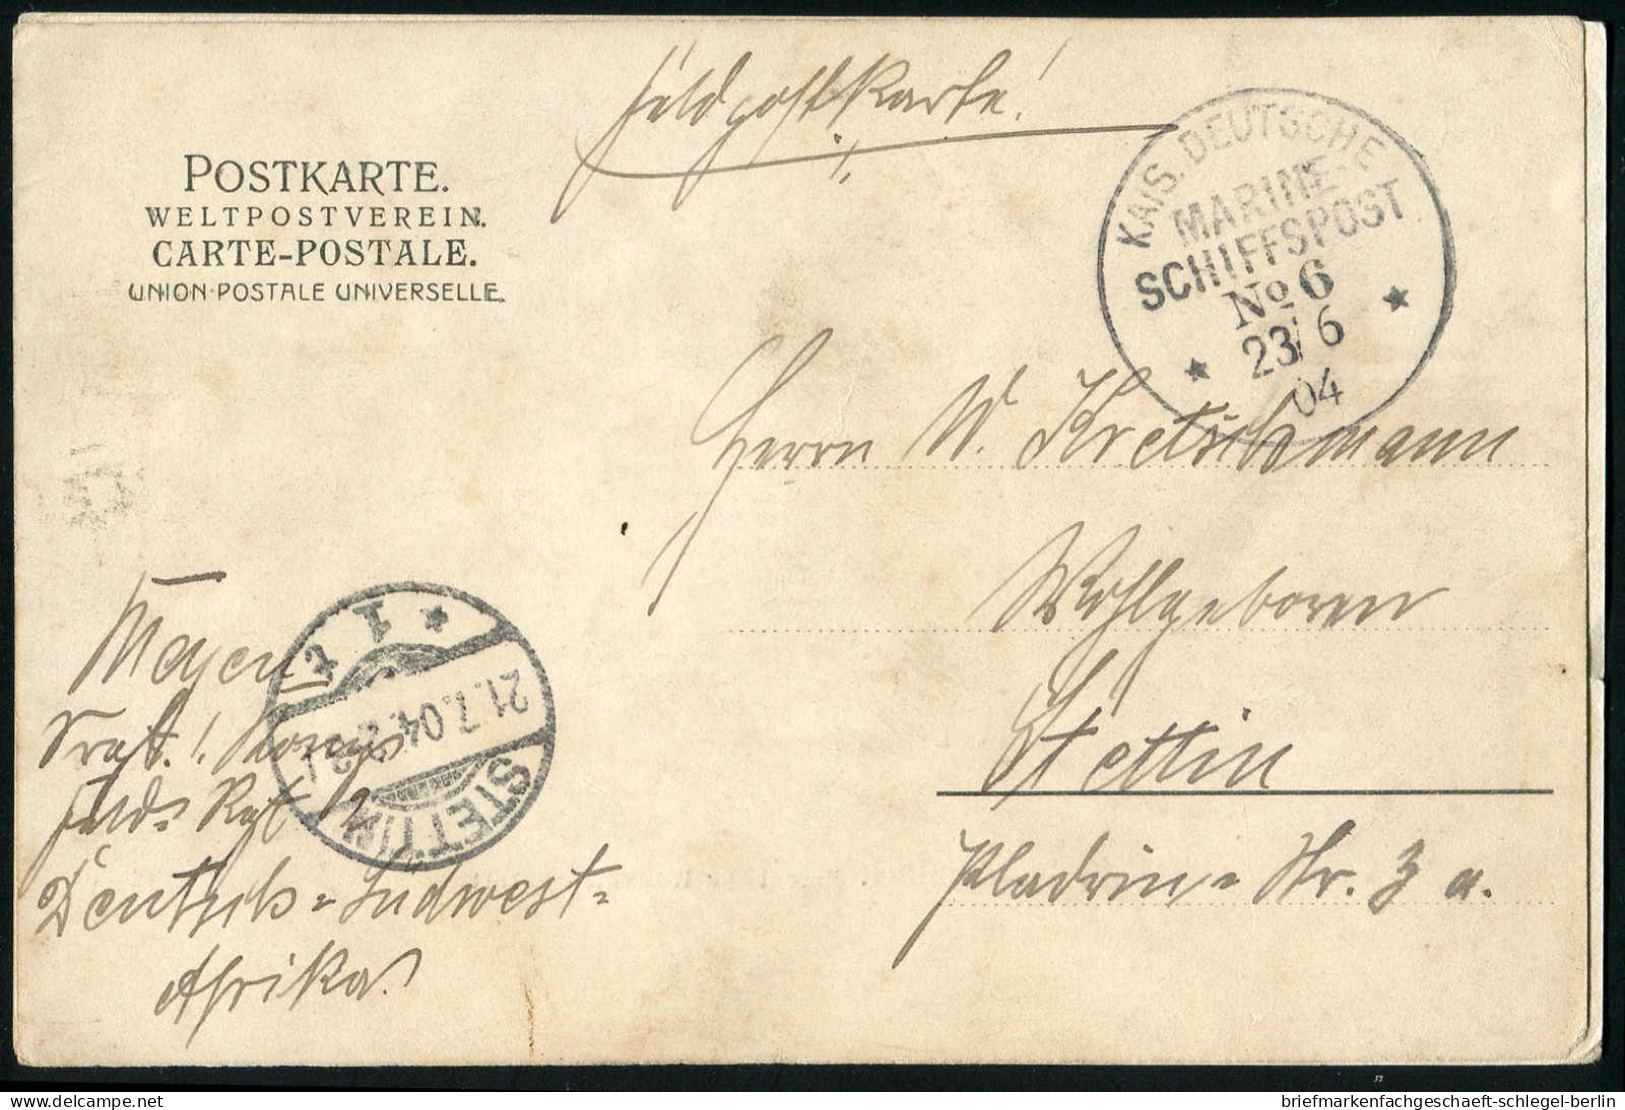 Deutsche Kolonien Südwestafrika, 1904, Brief - Deutsch-Südwestafrika